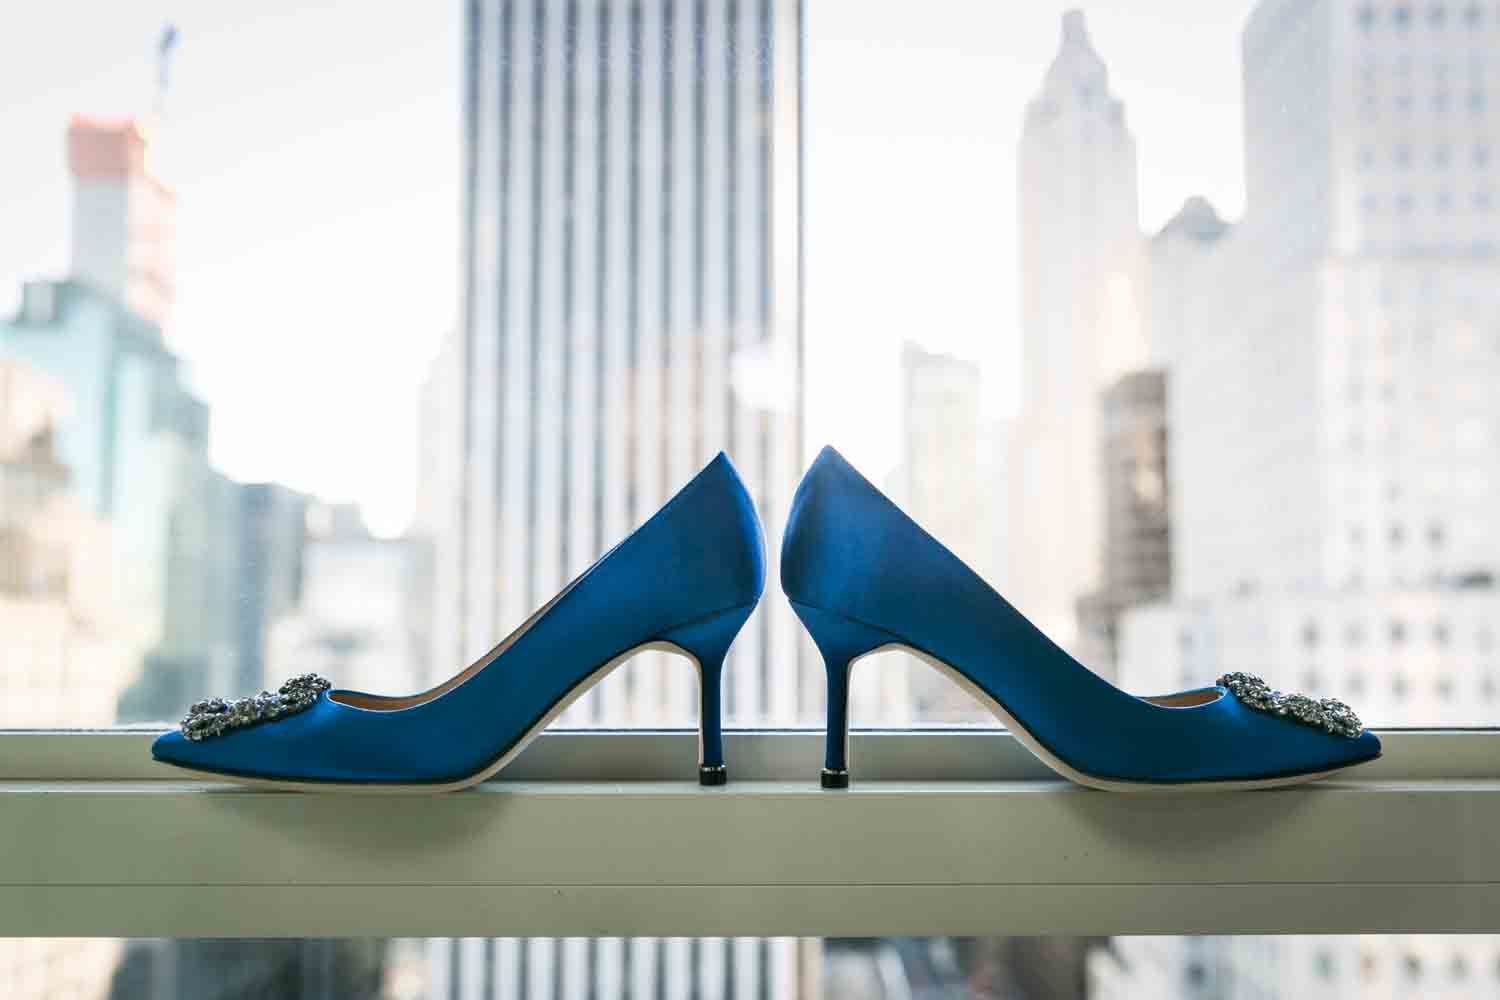 Blue Manolo Blahnik heels in windowsill with NYC skyline in background